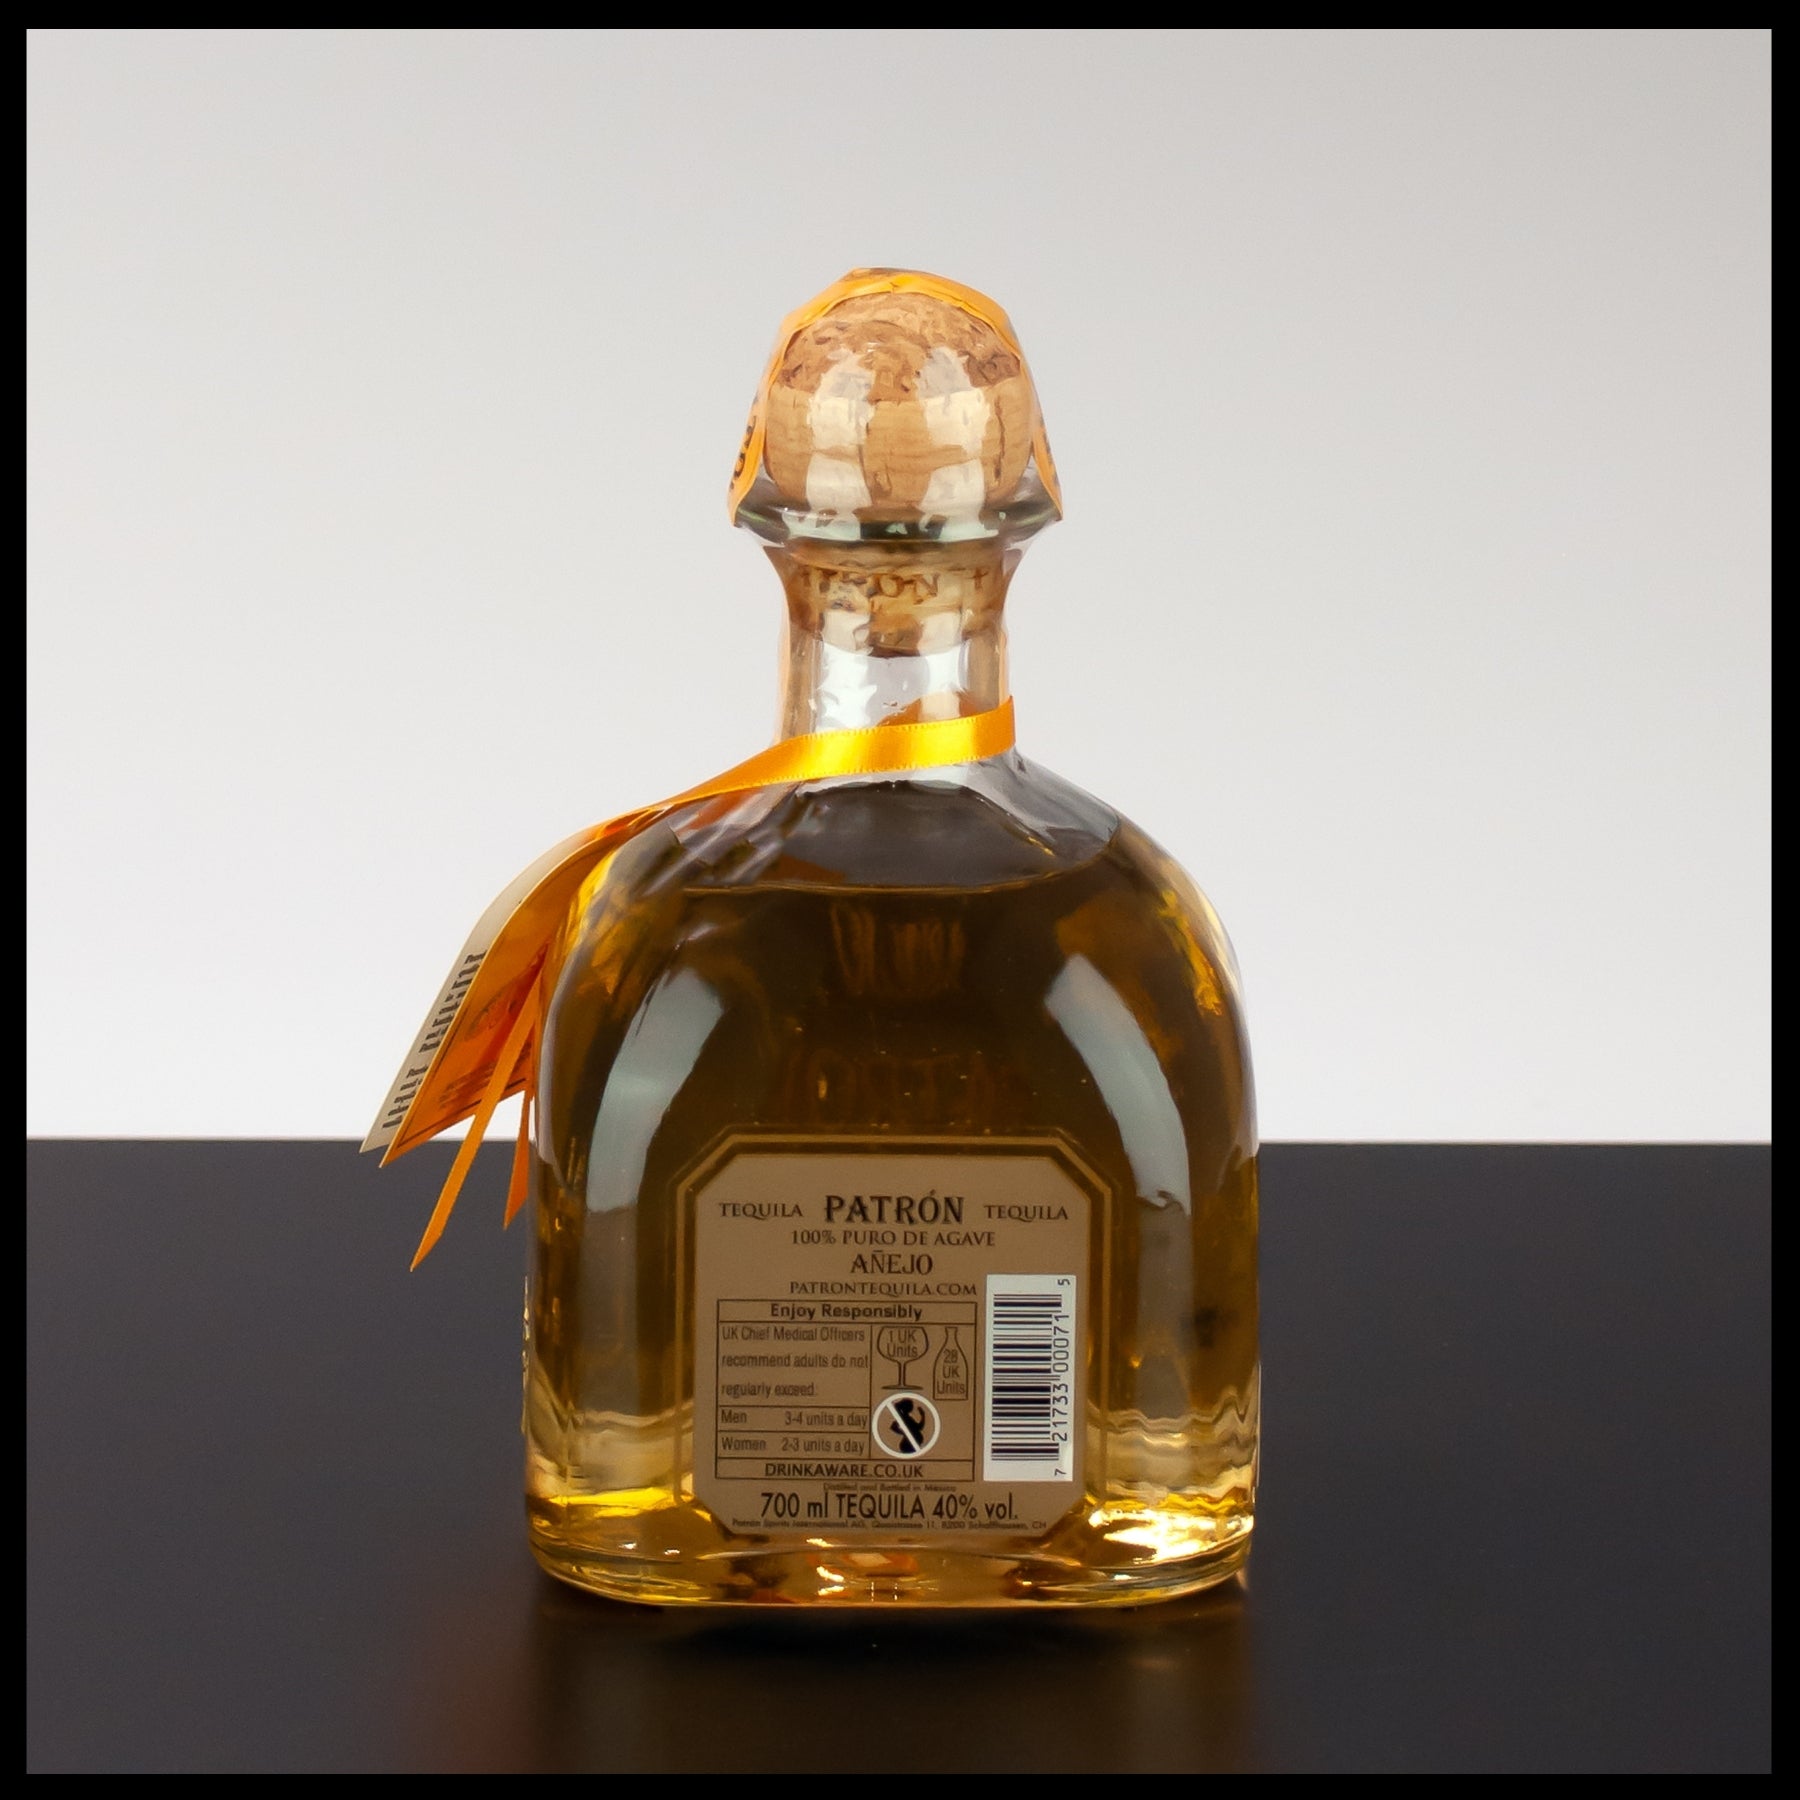 Patron Anejo Tequila 0,7L - 40% - Trinklusiv